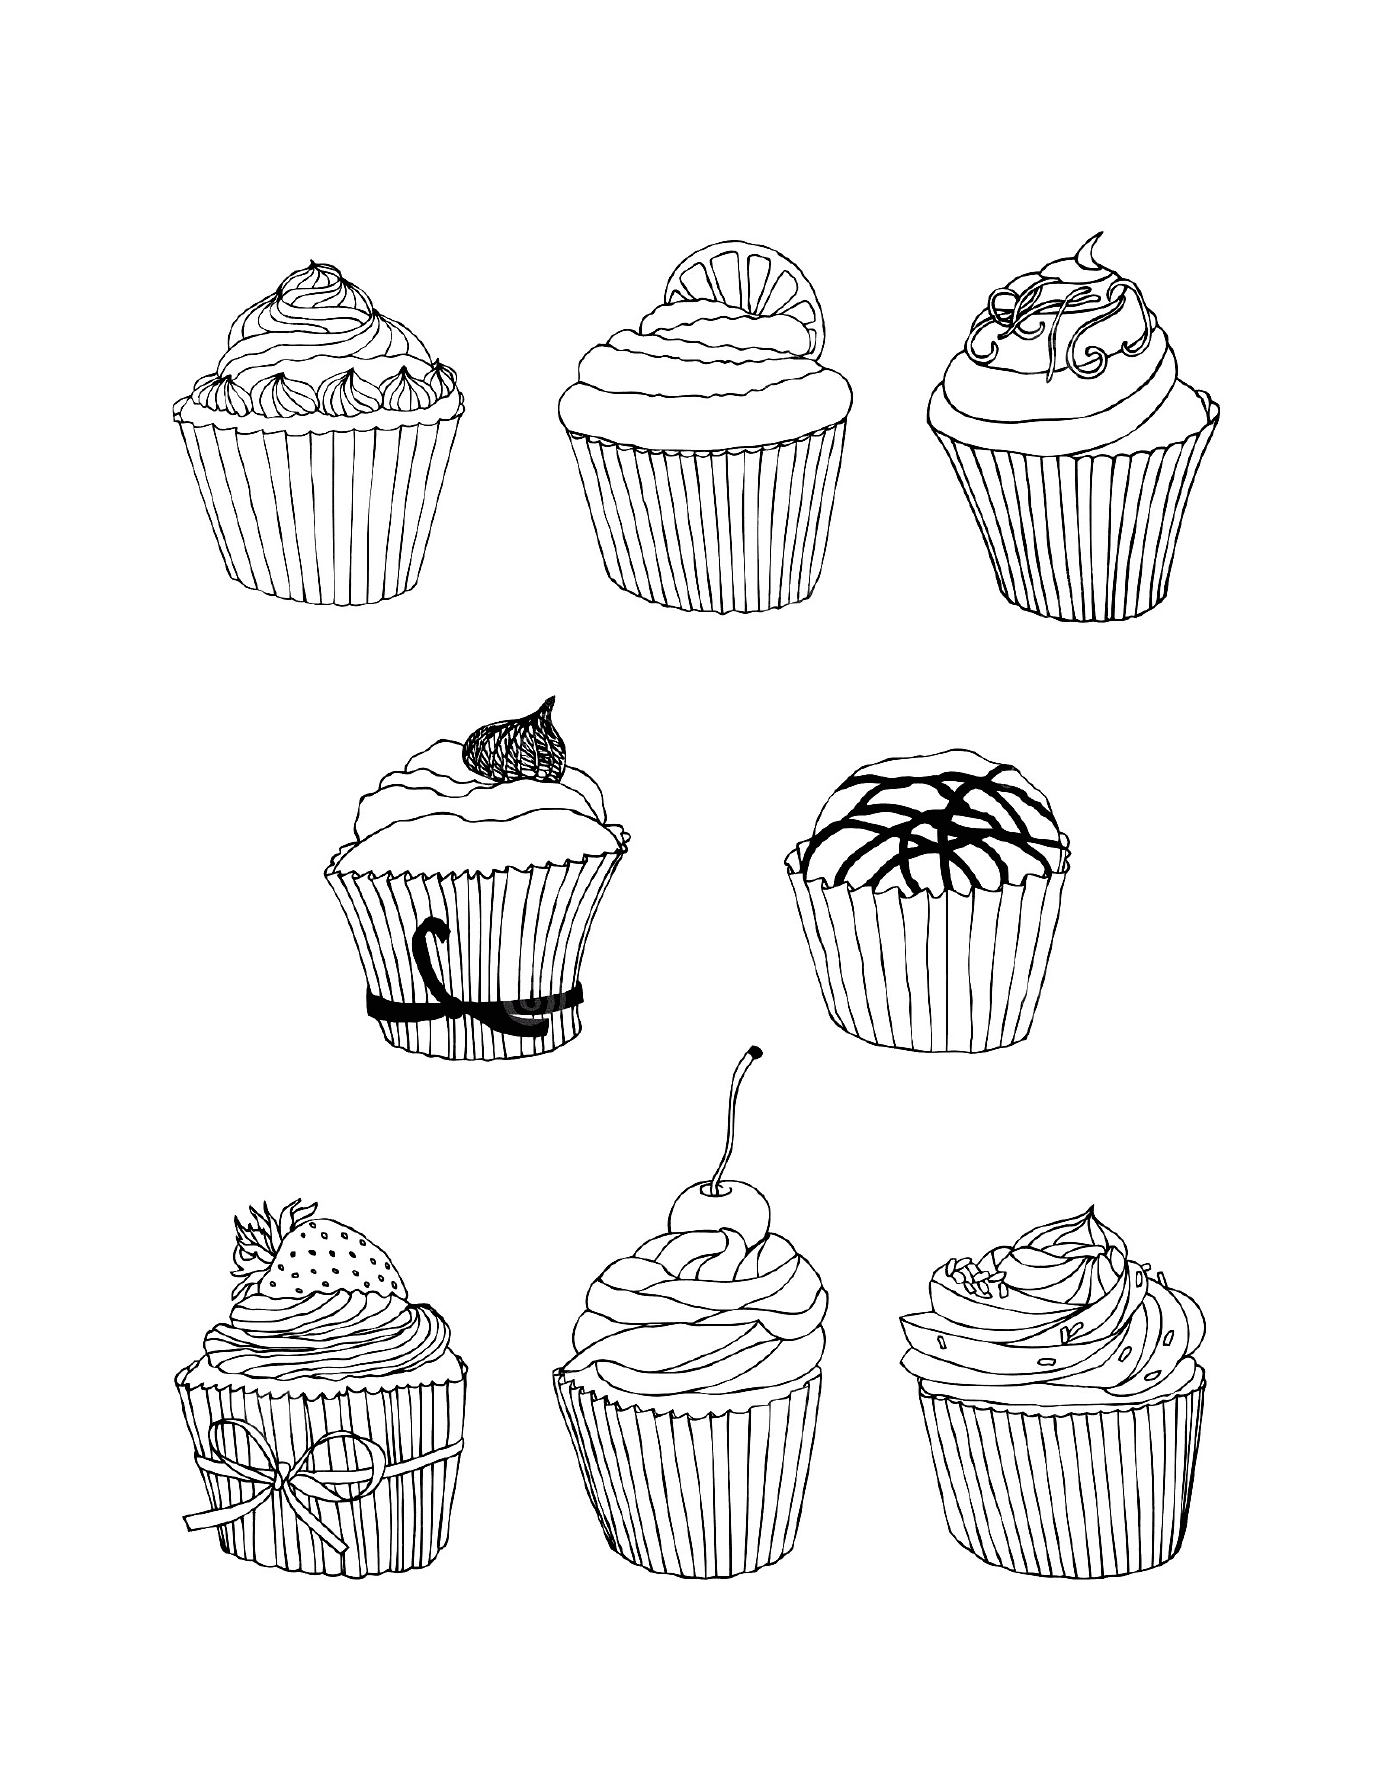  Free cupcakes drawn 